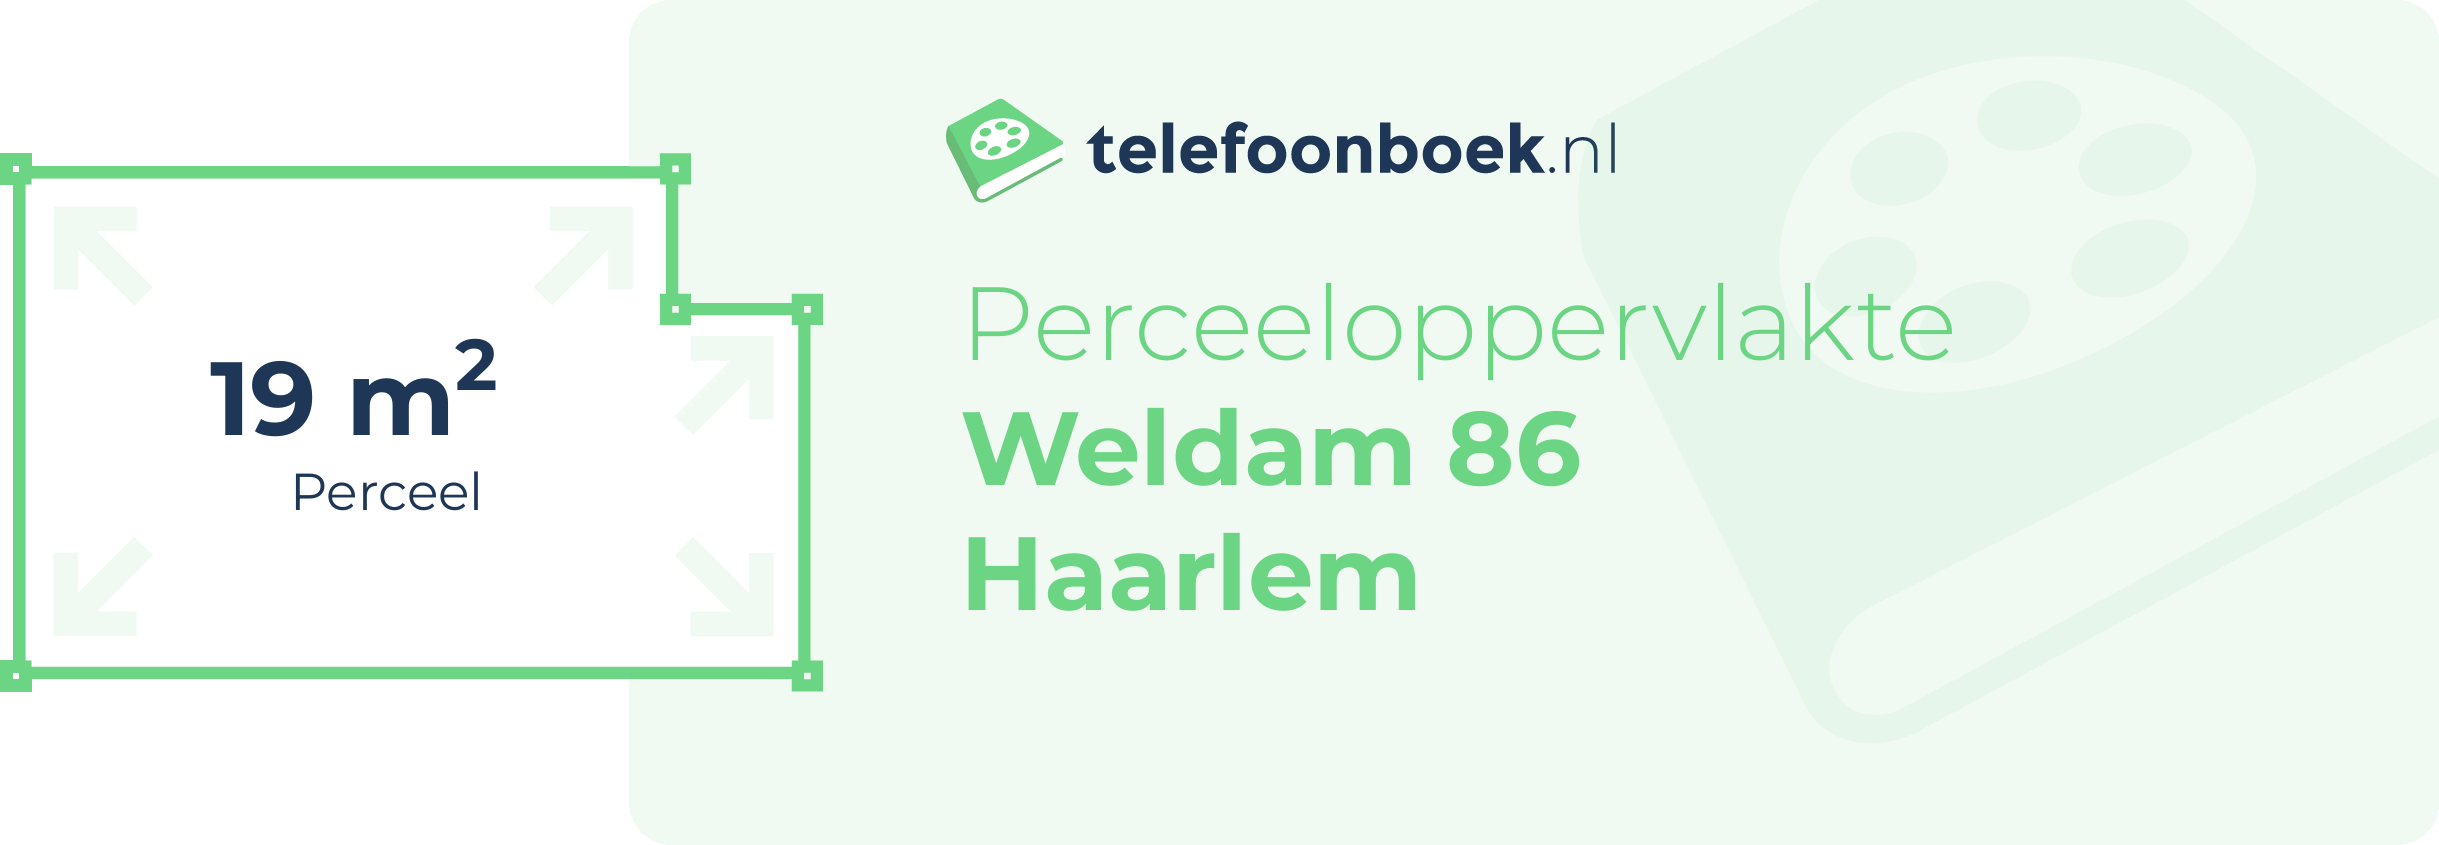 Perceeloppervlakte Weldam 86 Haarlem